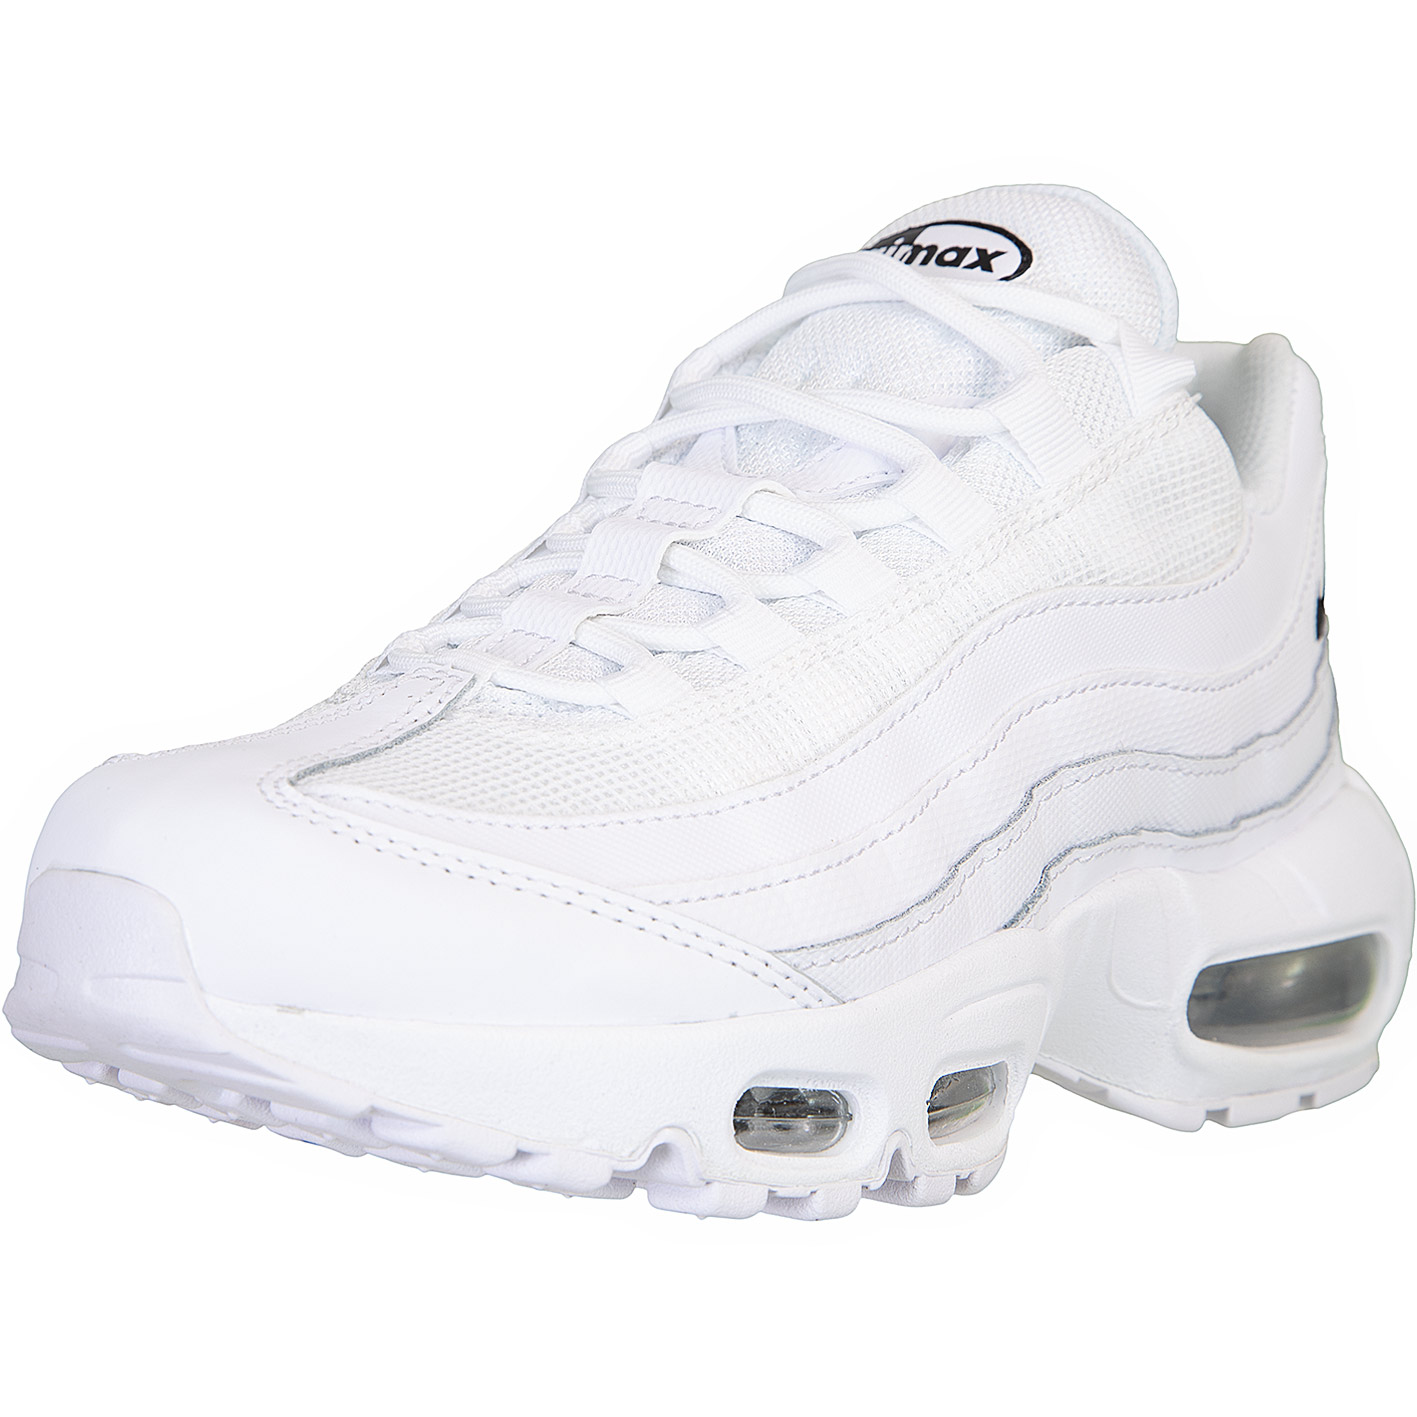 ☆ Nike Air Max 95 Essential Damen Sneaker weiß - hier bestellen!